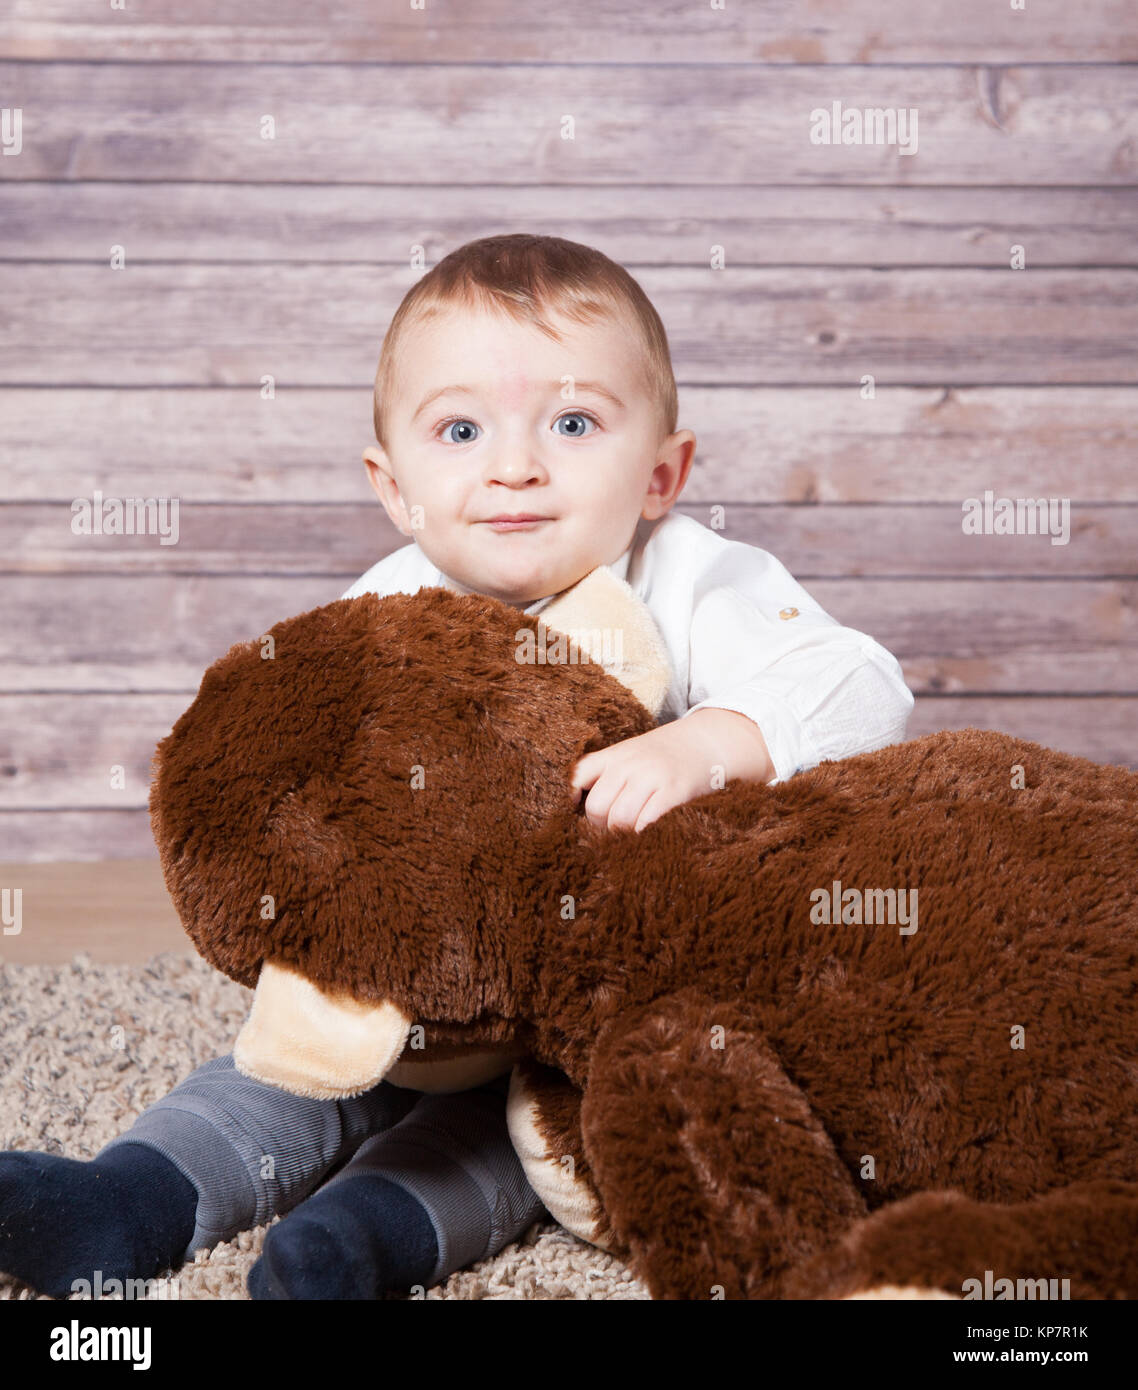 Baby boy with huge monkey toy Stock Photo